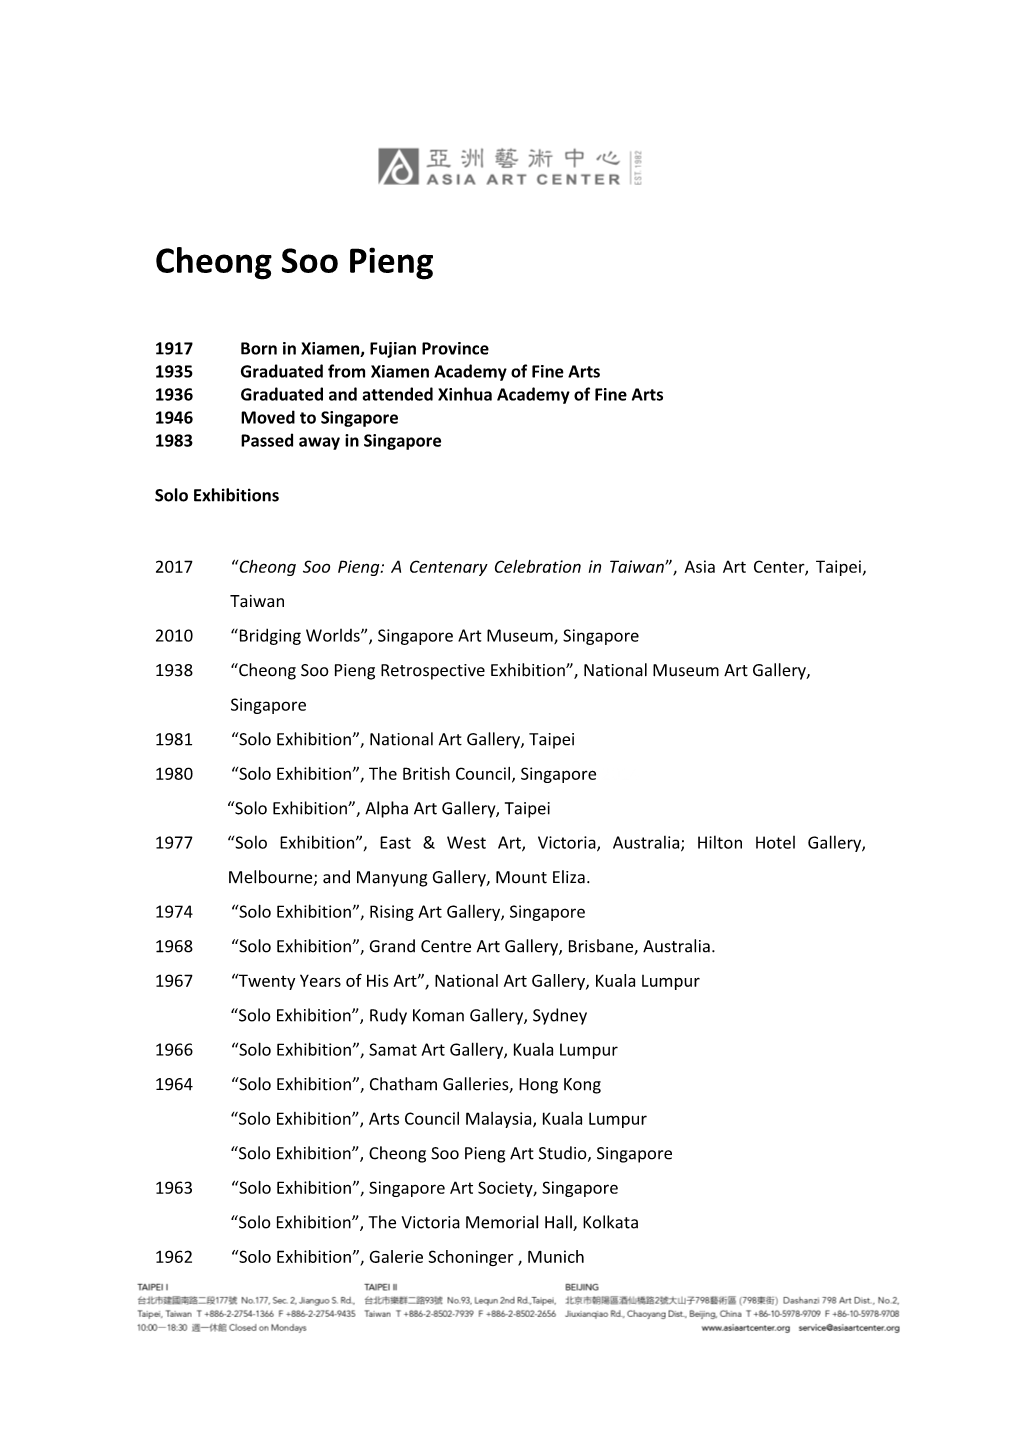 Cheong Soo Pieng